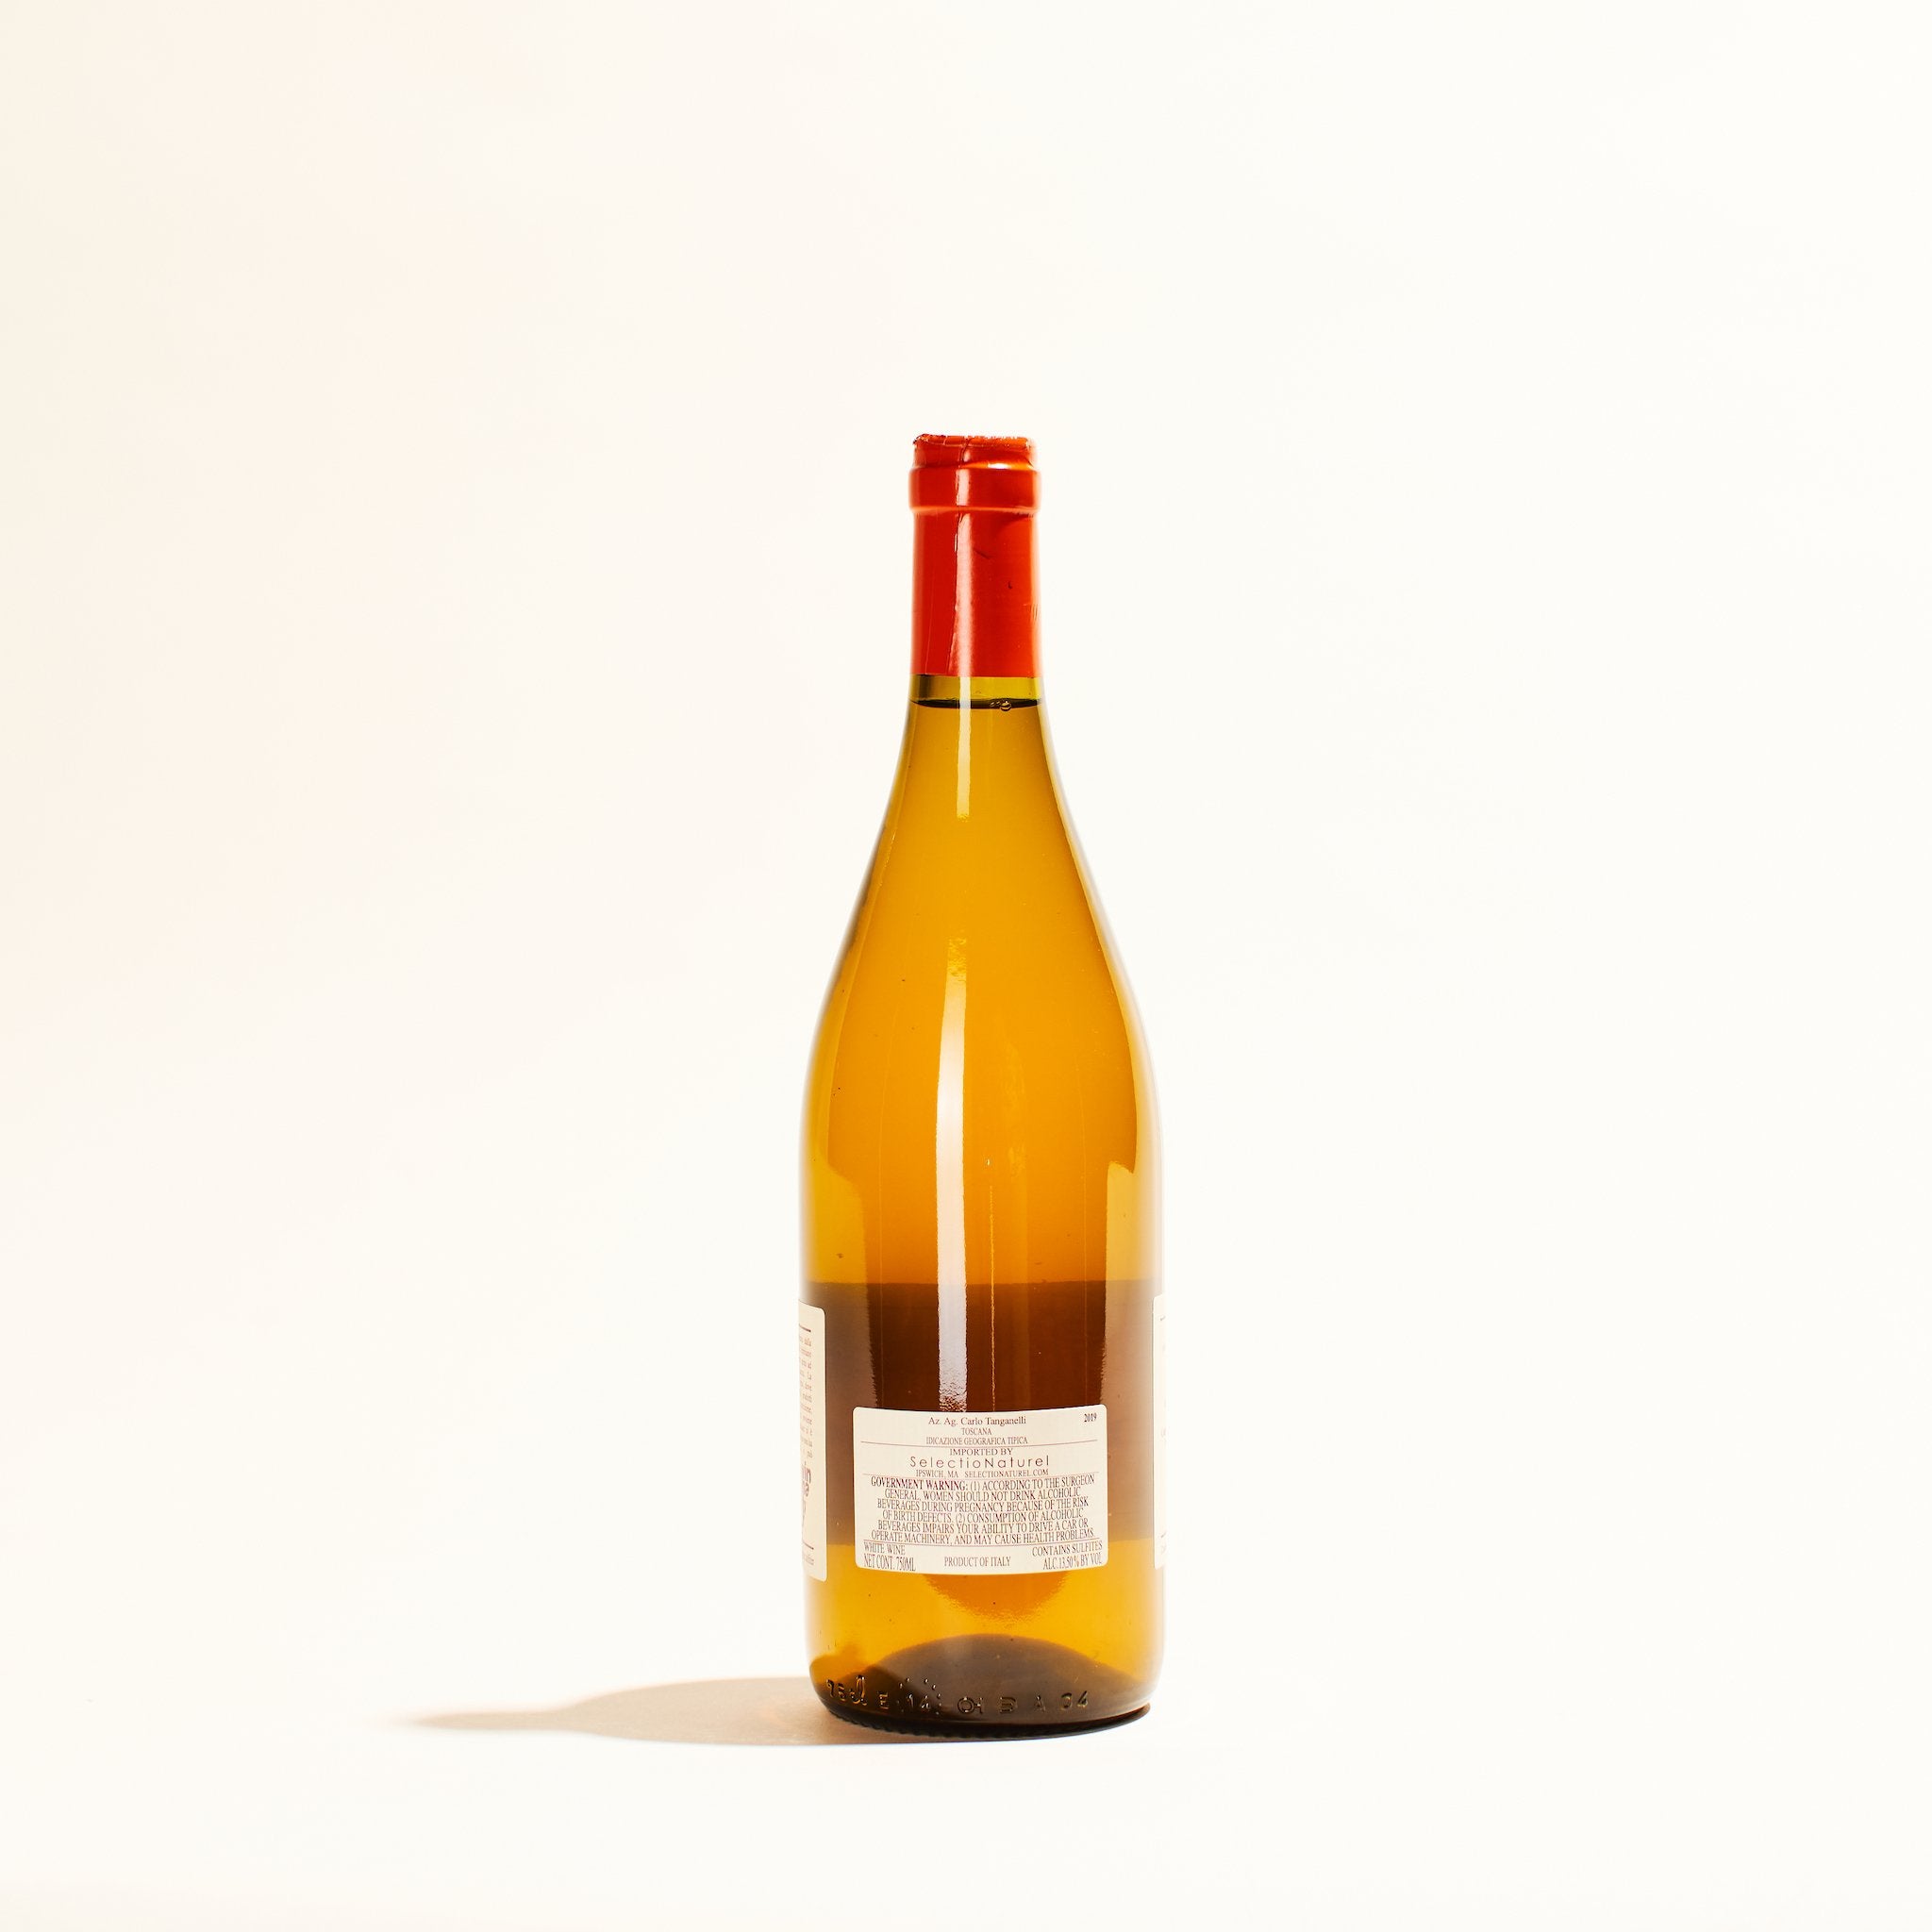 anatrino by tanganelli natural orange wine from tuscany italy